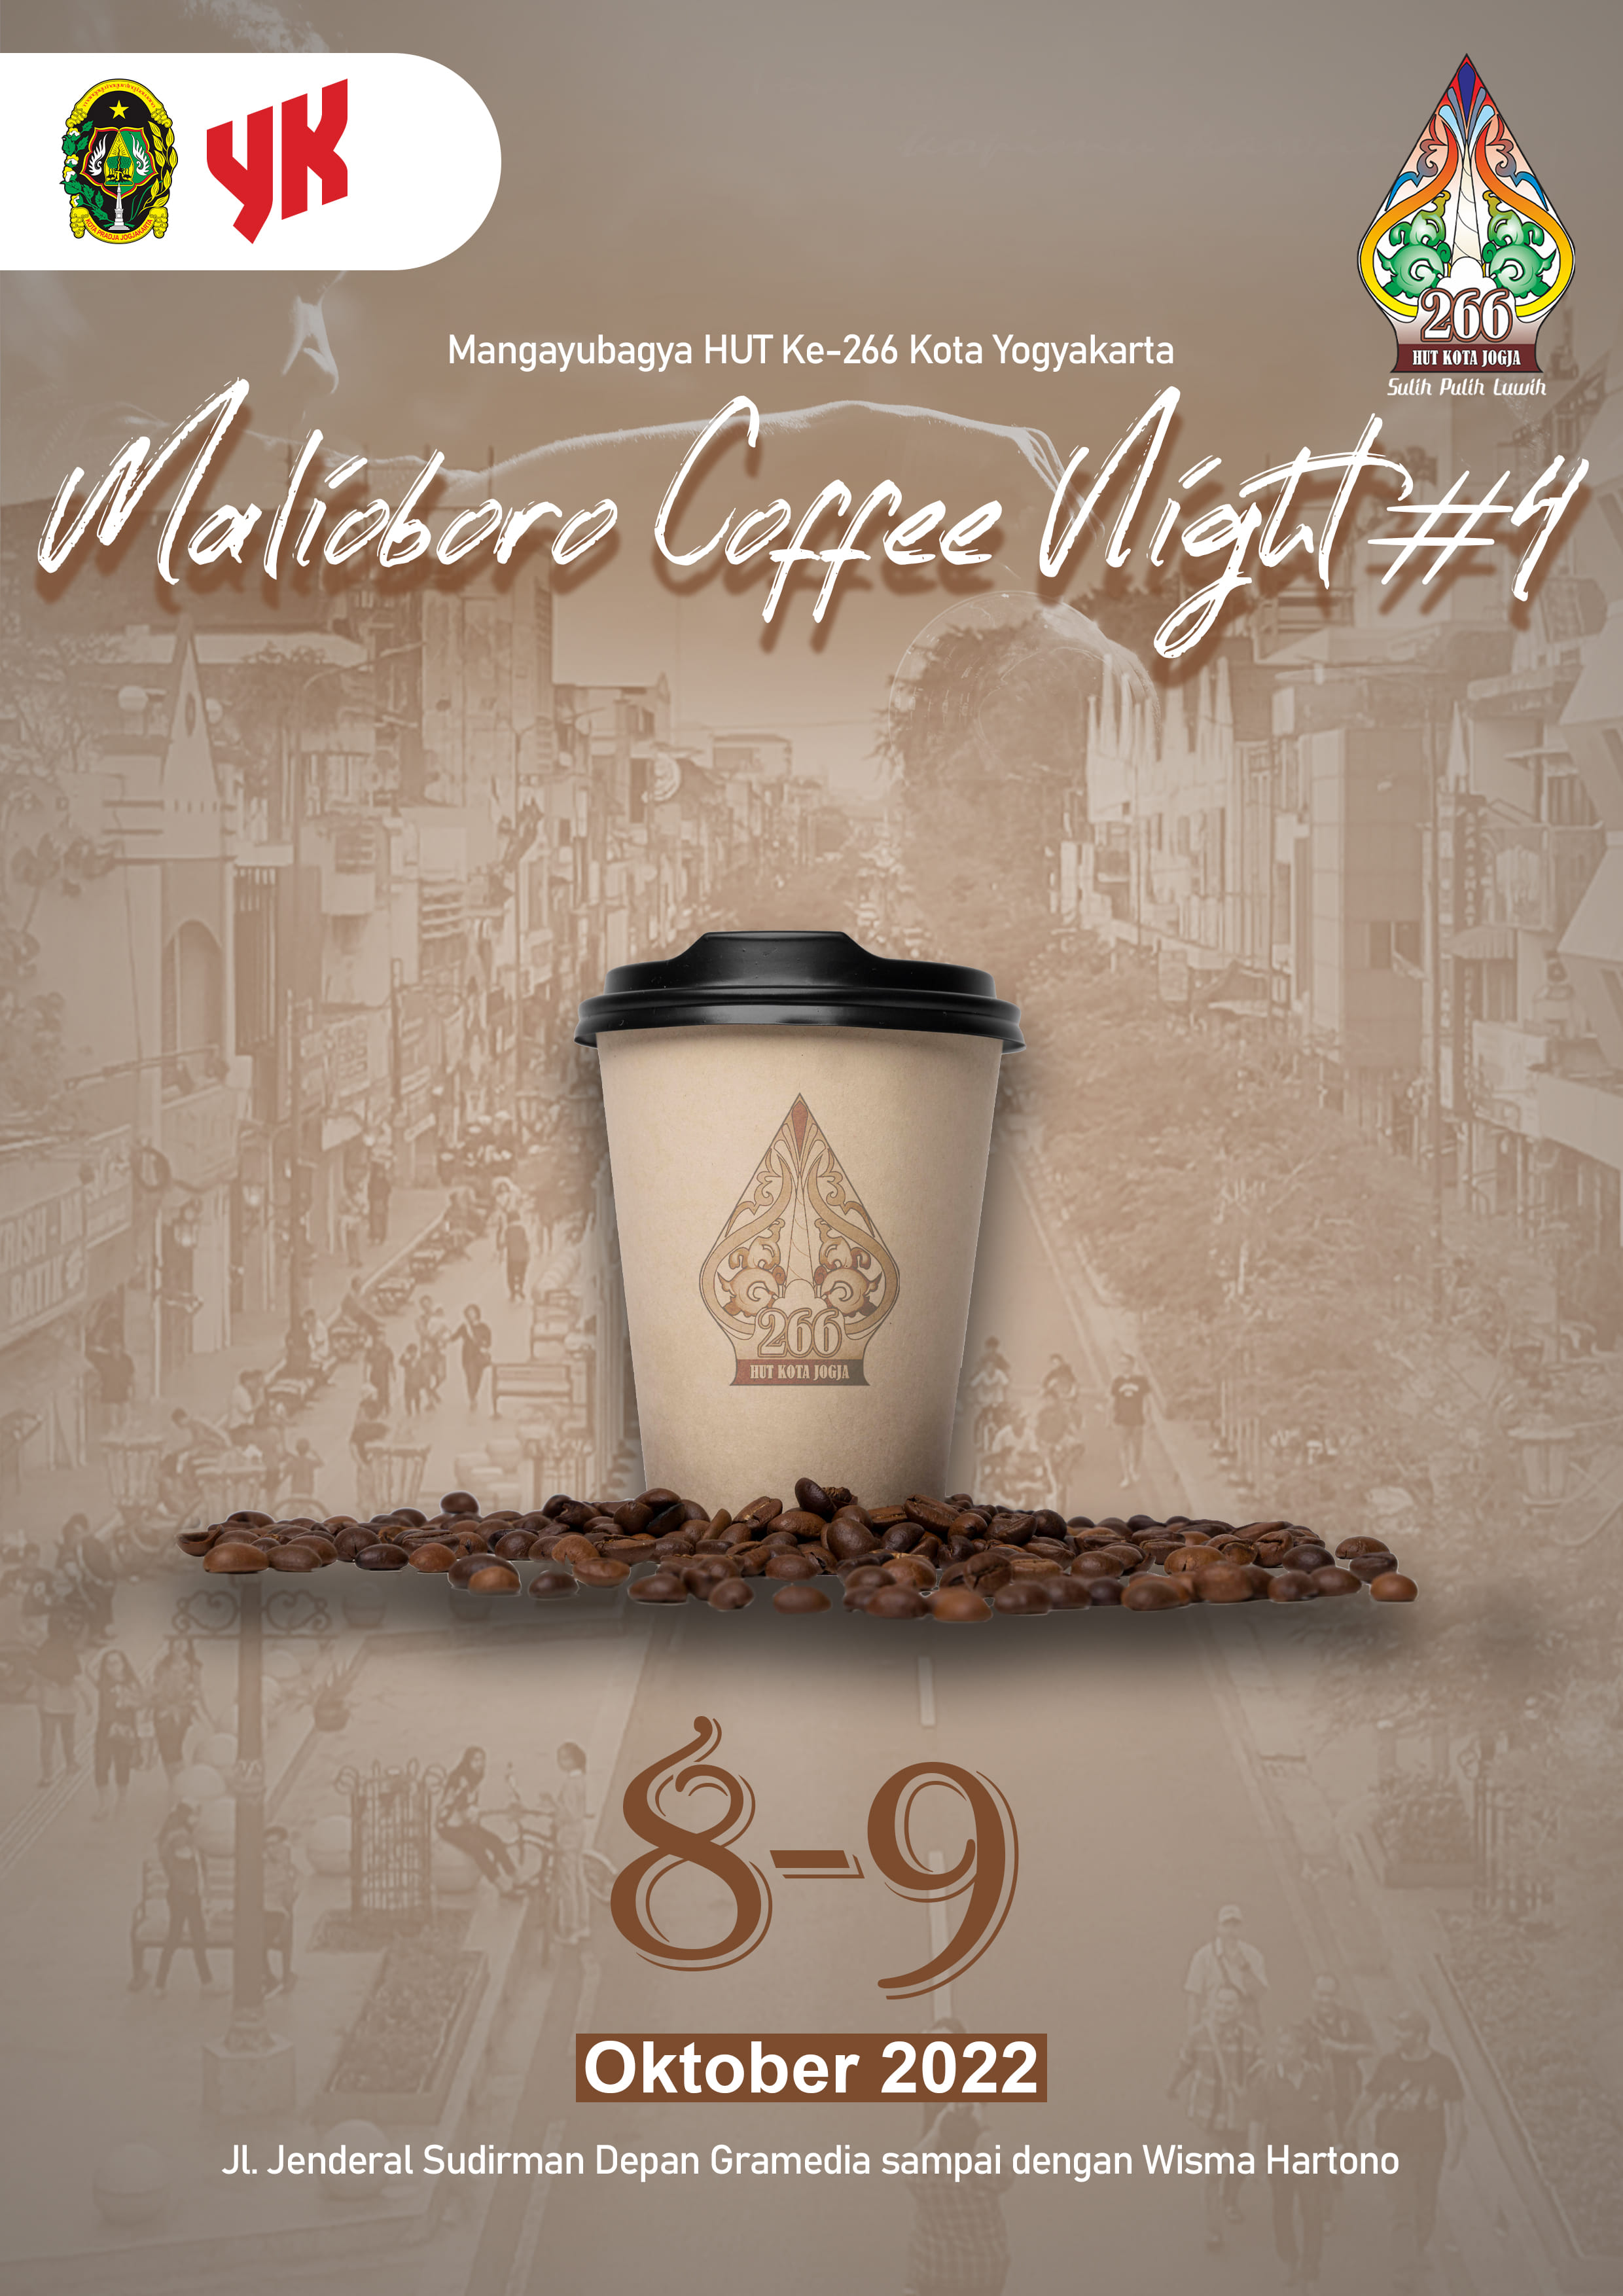 Malioboro Coffe Night #4